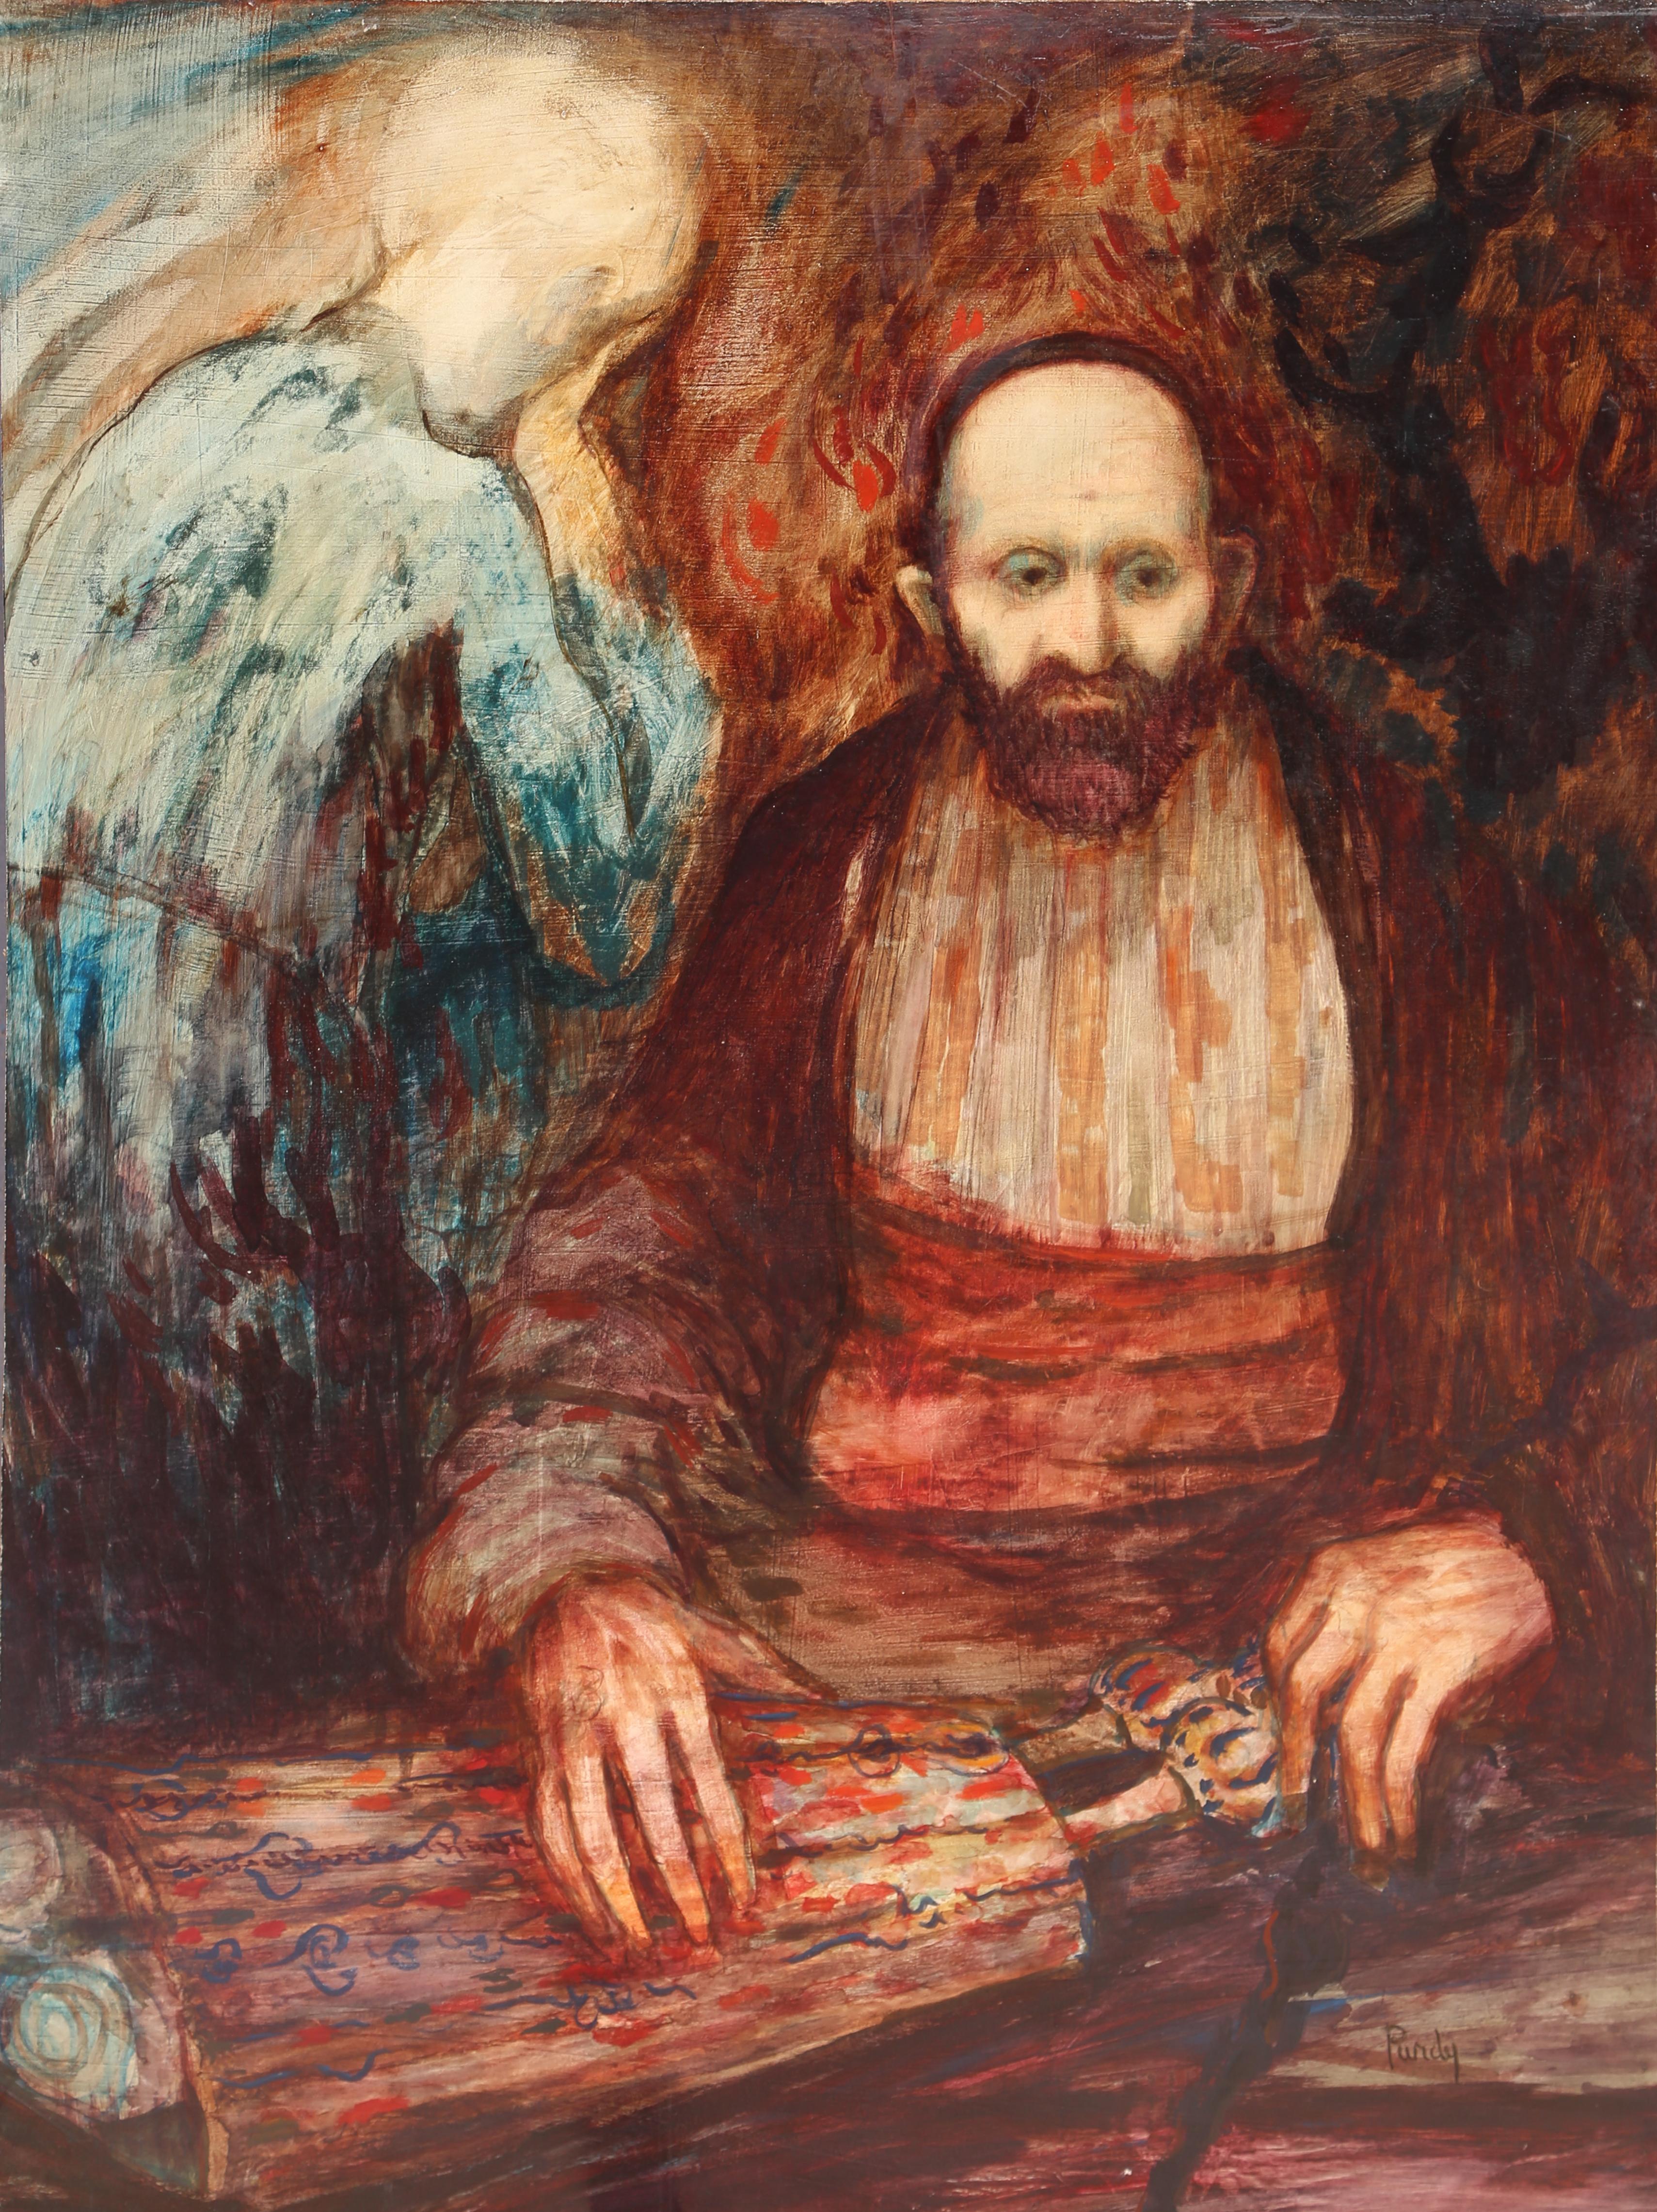 Künstler: Donald Roy Purdy, Amerikaner (1924 - )
Titel: Rabbi
Medium: Öl auf Masonit, signiert v.l.n.r.
Größe: 36 x 24 in. (91,44 x 60,96 cm)